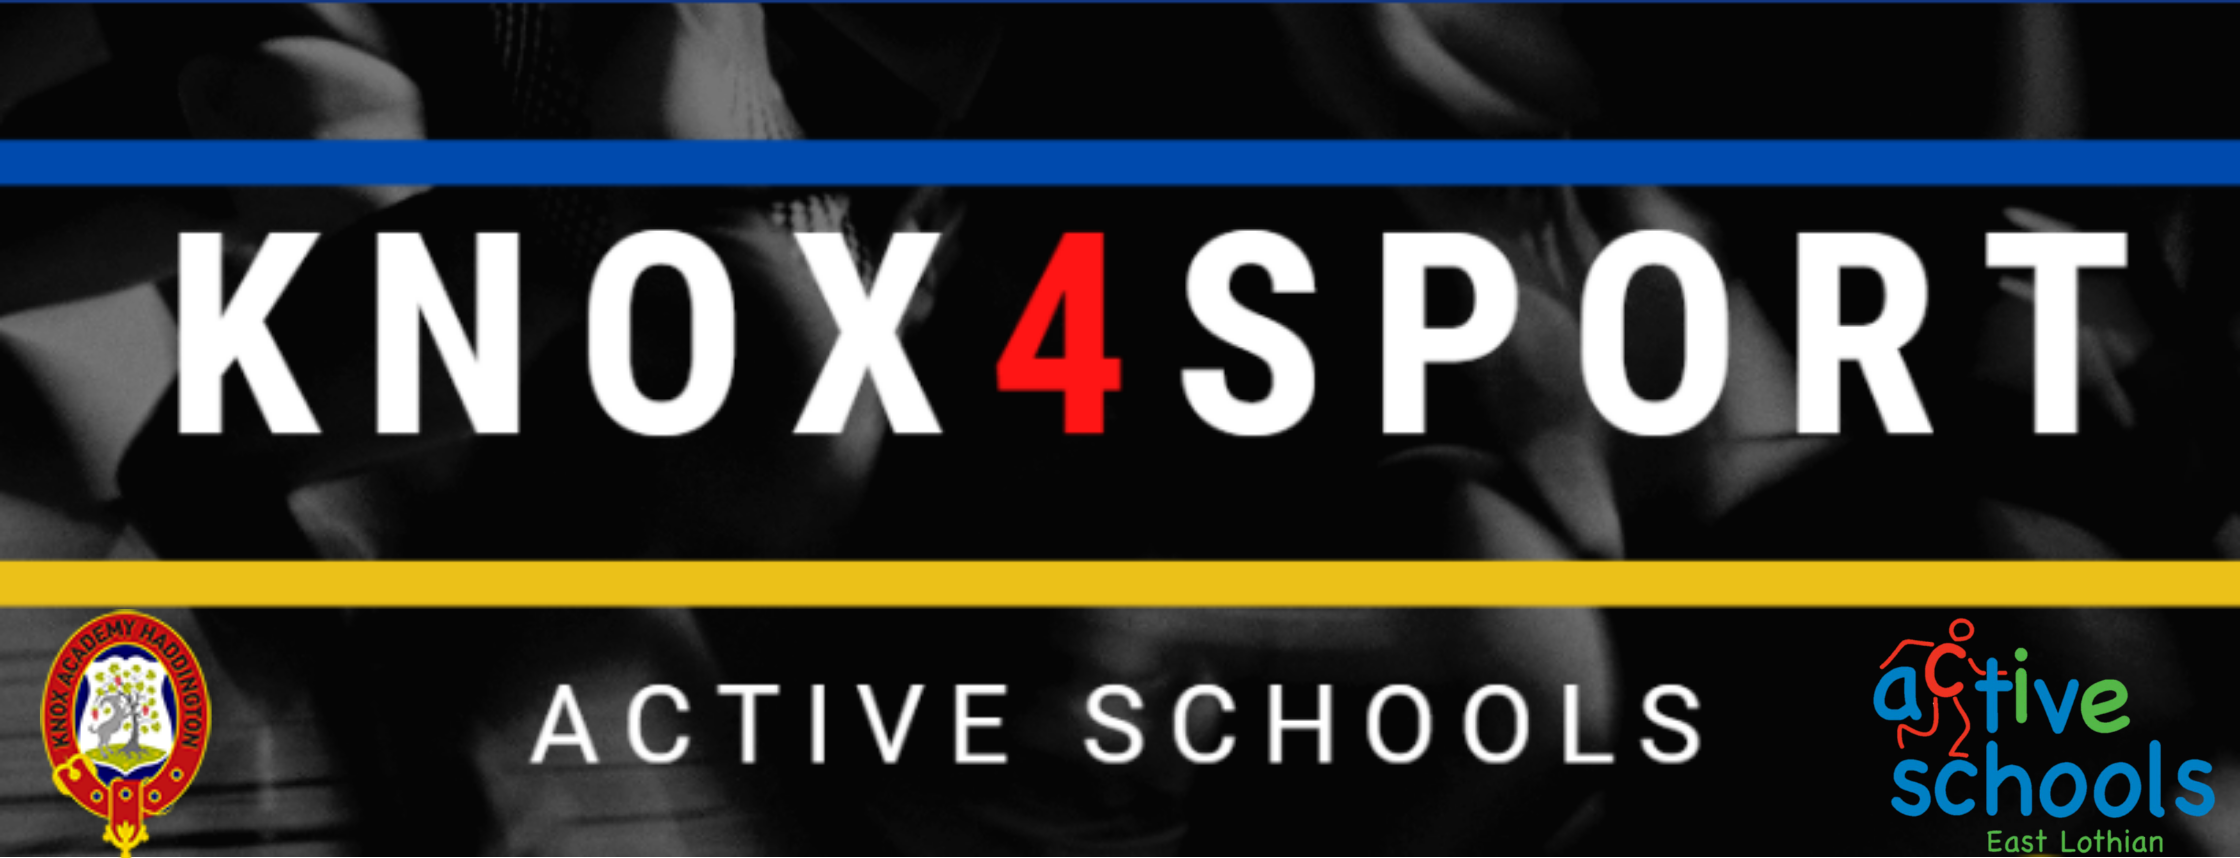 knox4sport active school9